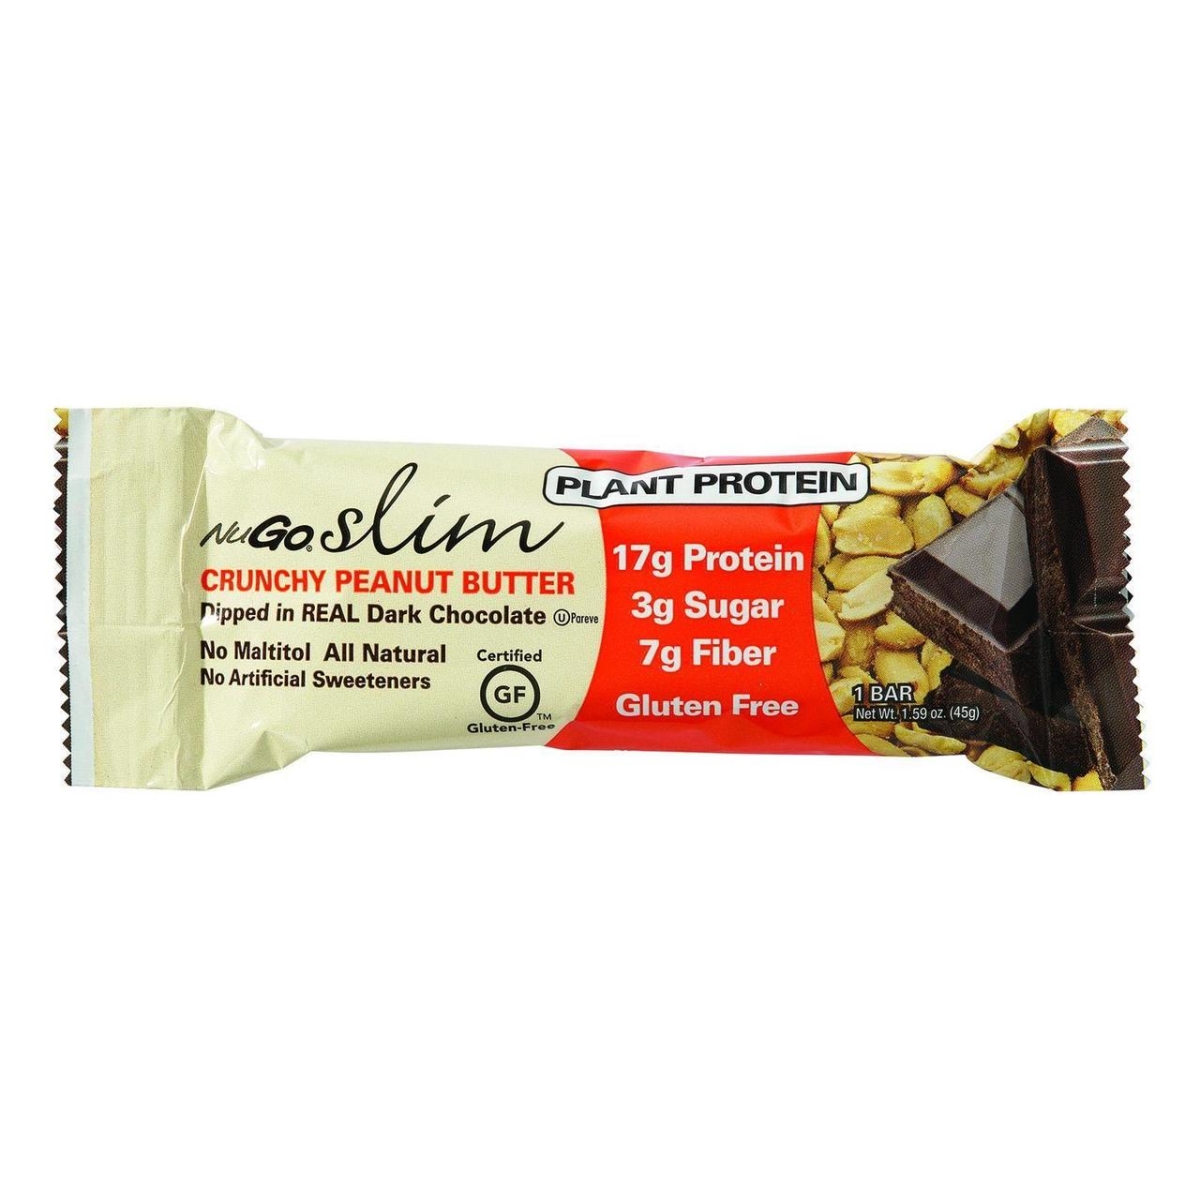 Hg1158443 1.59 Oz Slim Crunchy Peanut Butter Bar - Case Of 12